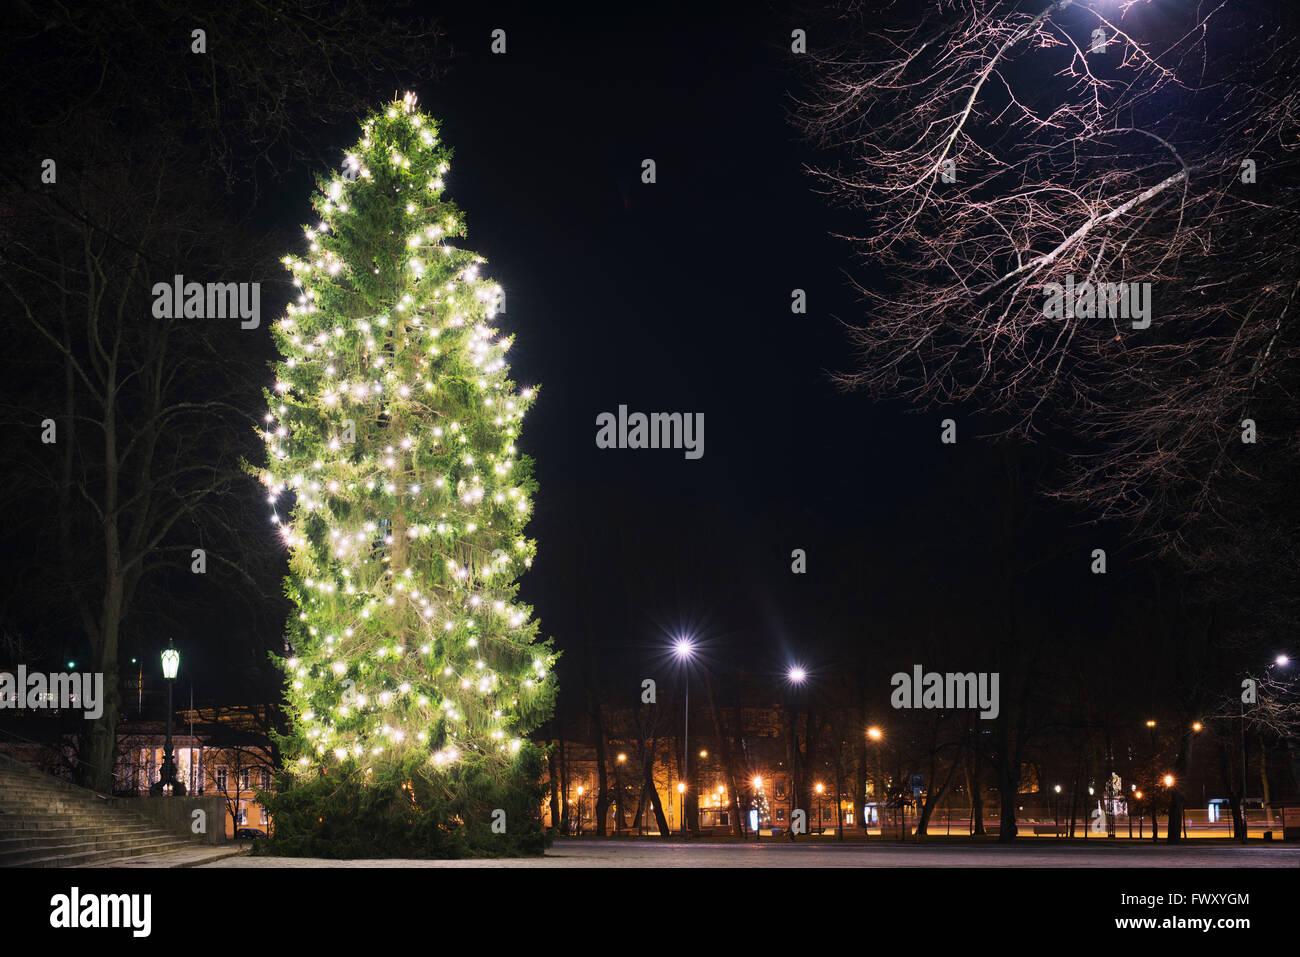 Finland, Varsinais-Suomi, Turku, Illuminated Christmas tree at night Stock Photo